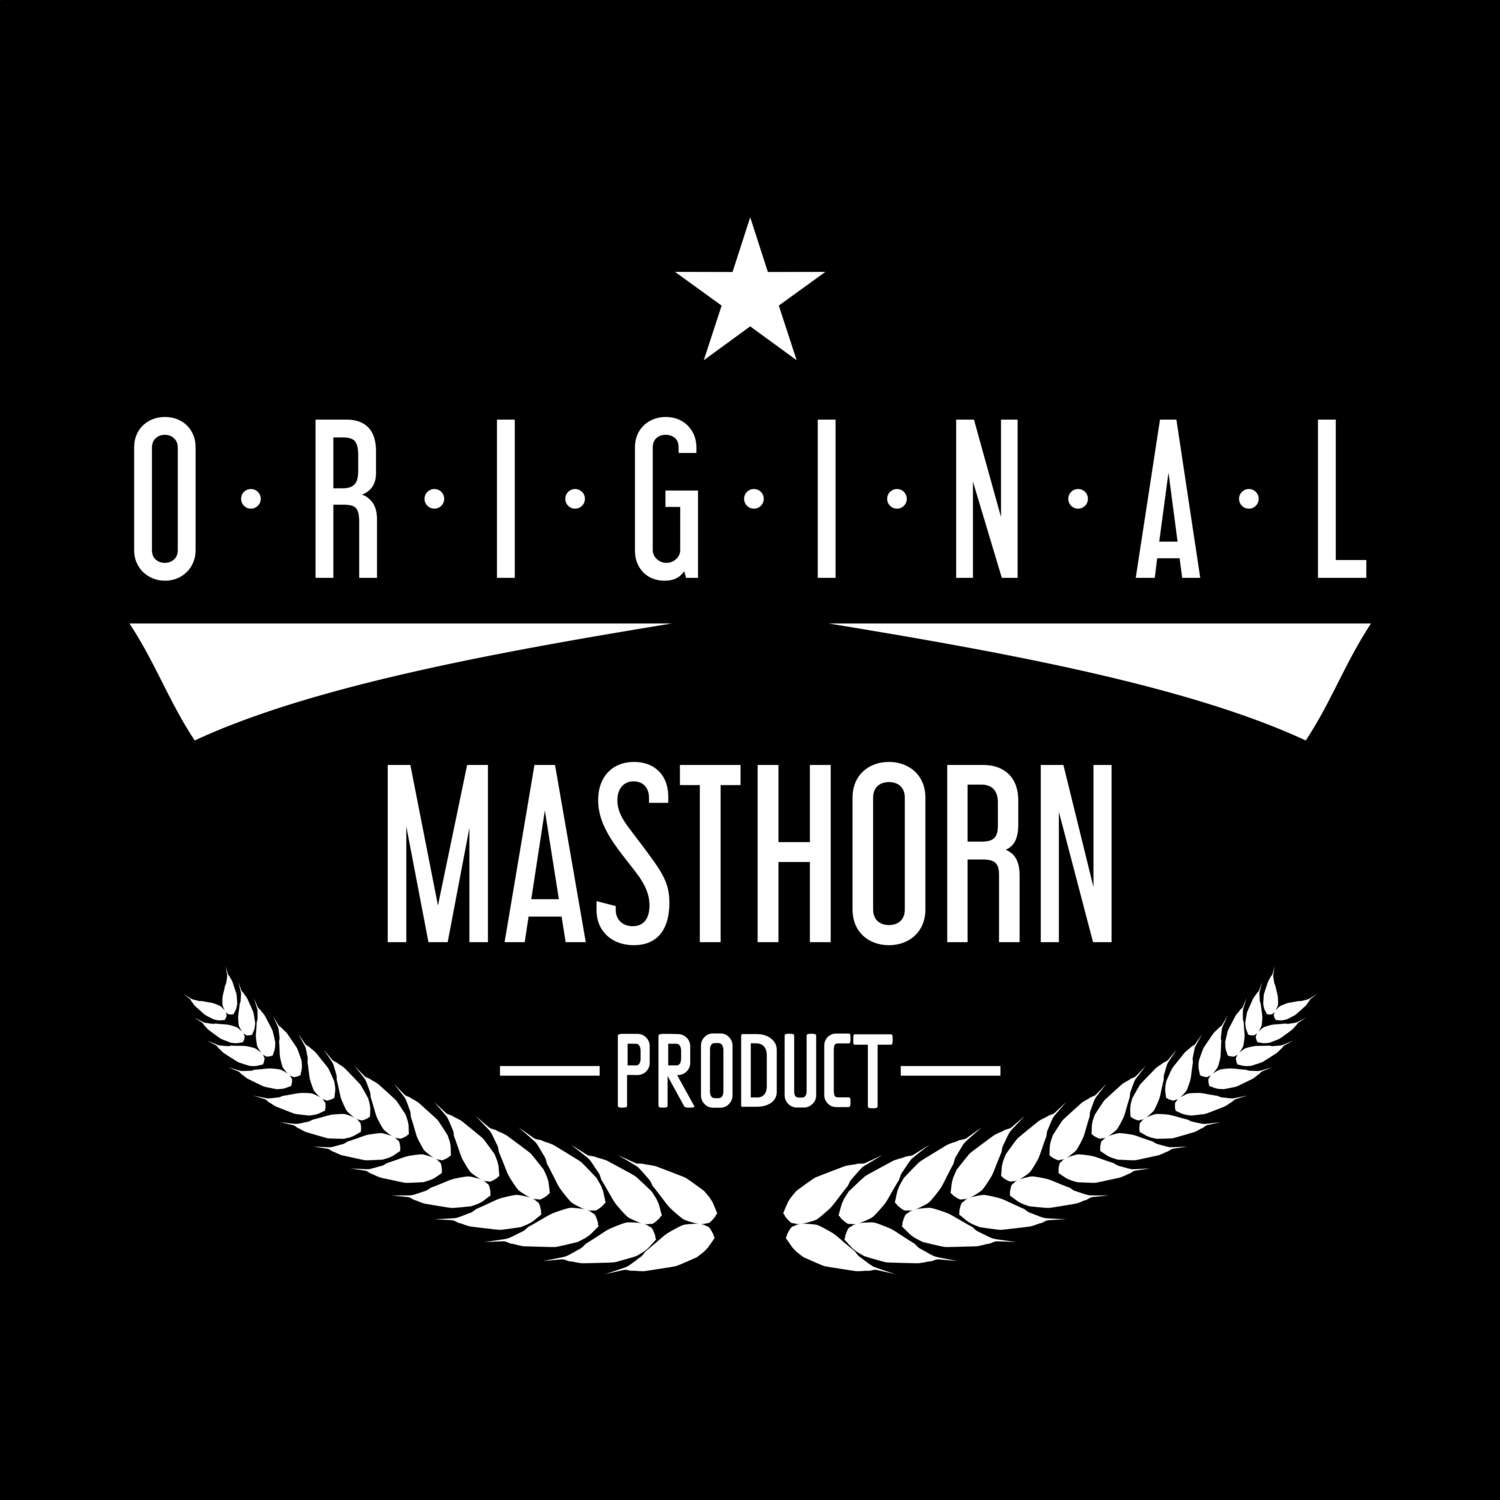 Masthorn T-Shirt »Original Product«